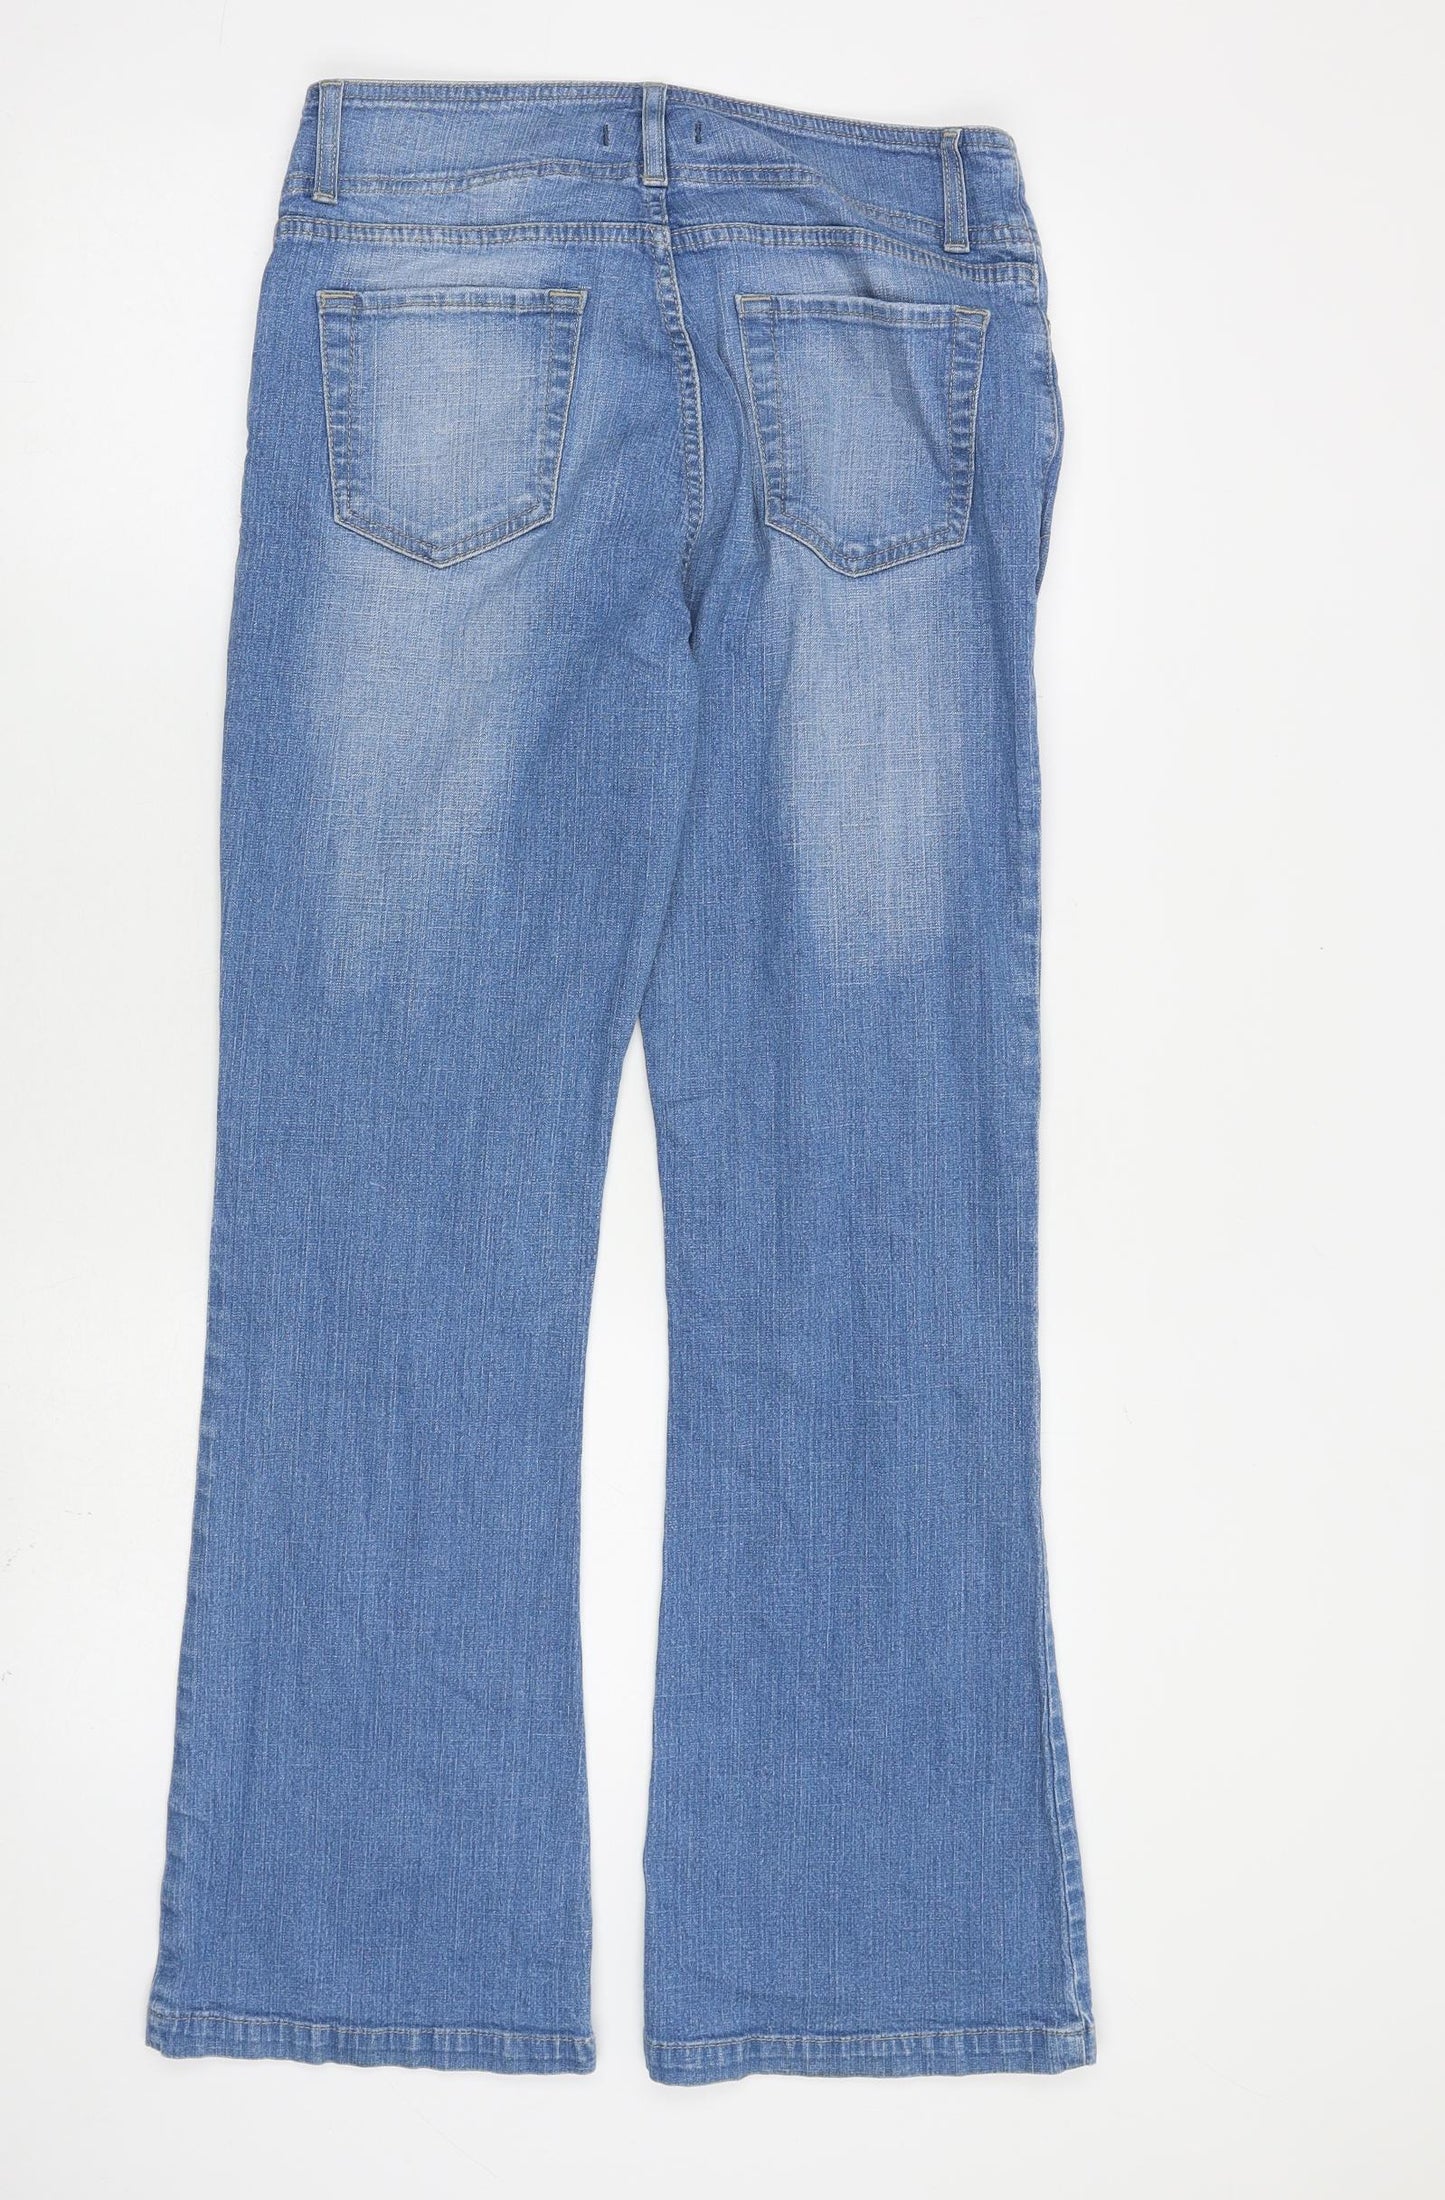 NEXT Womens Blue Cotton Bootcut Jeans Size 12 L30 in Regular Zip